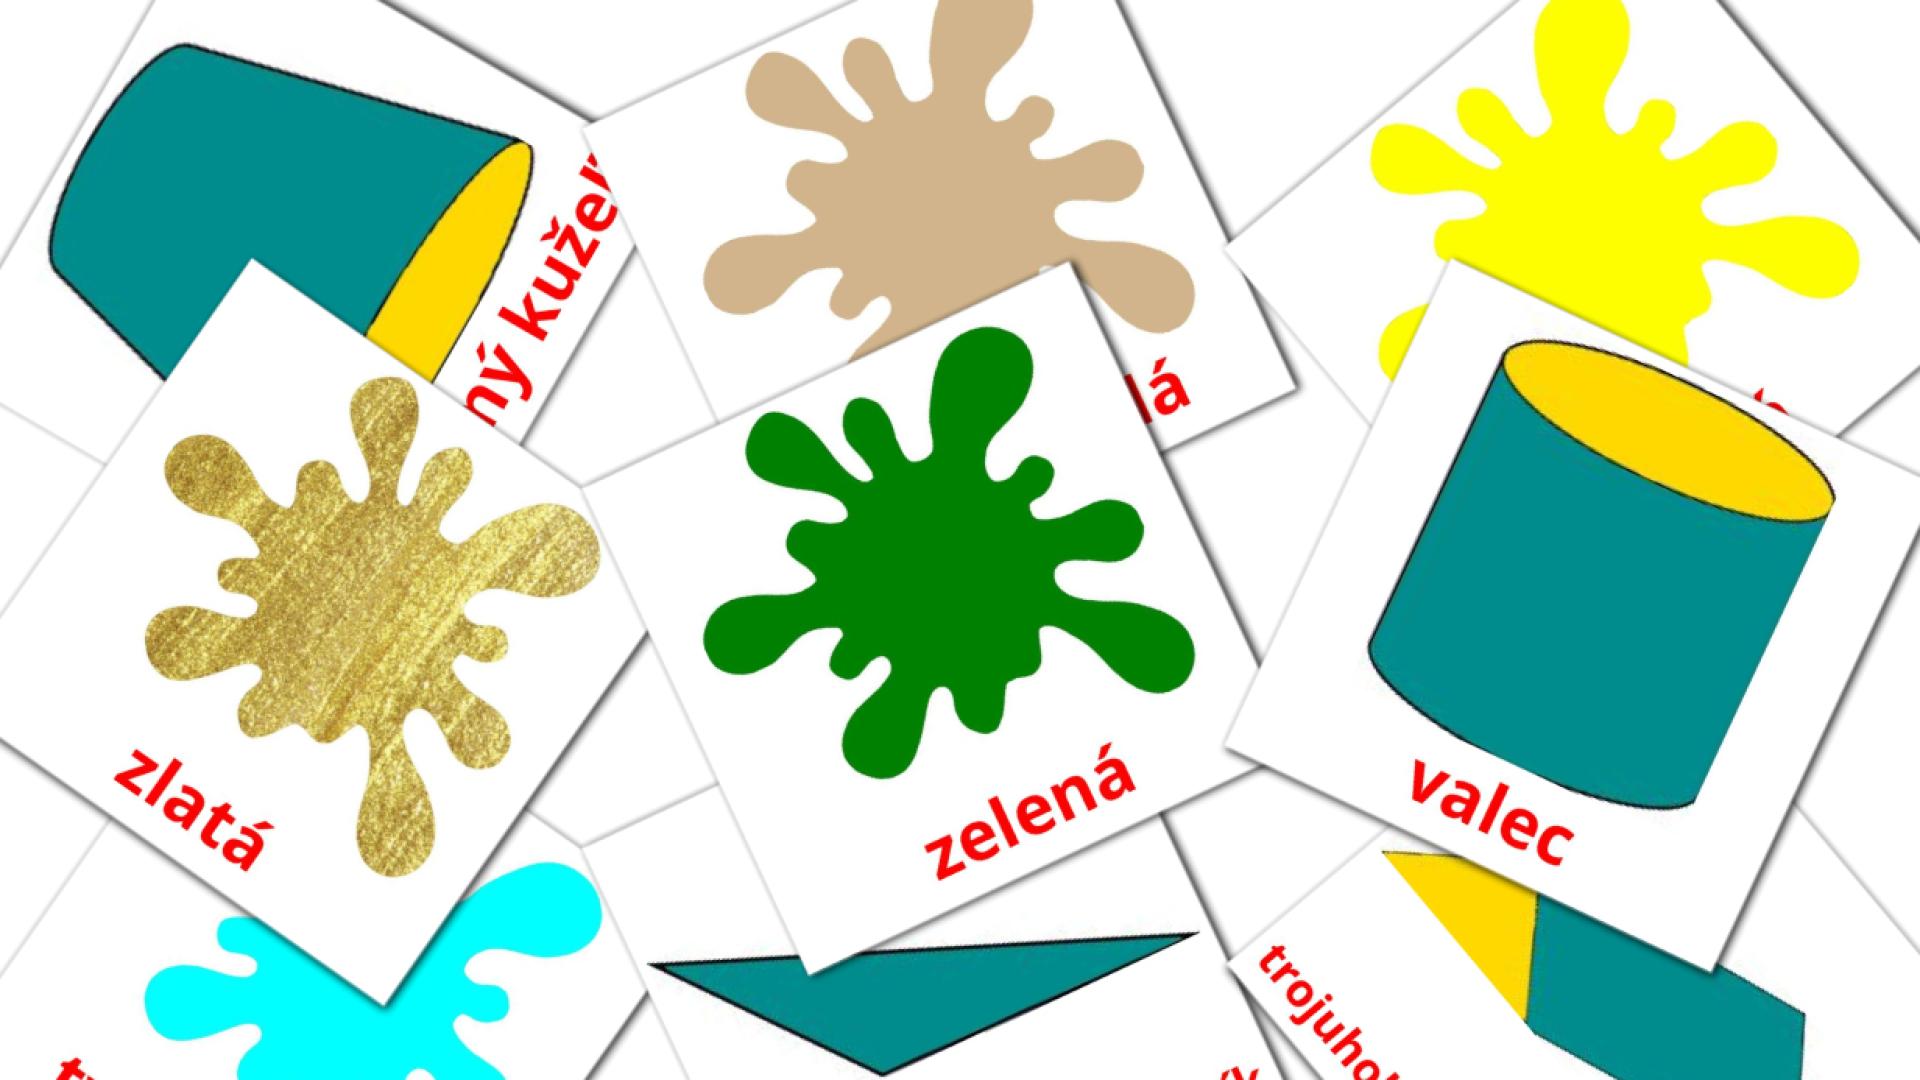 Farby a tvary slovak vocabulary flashcards